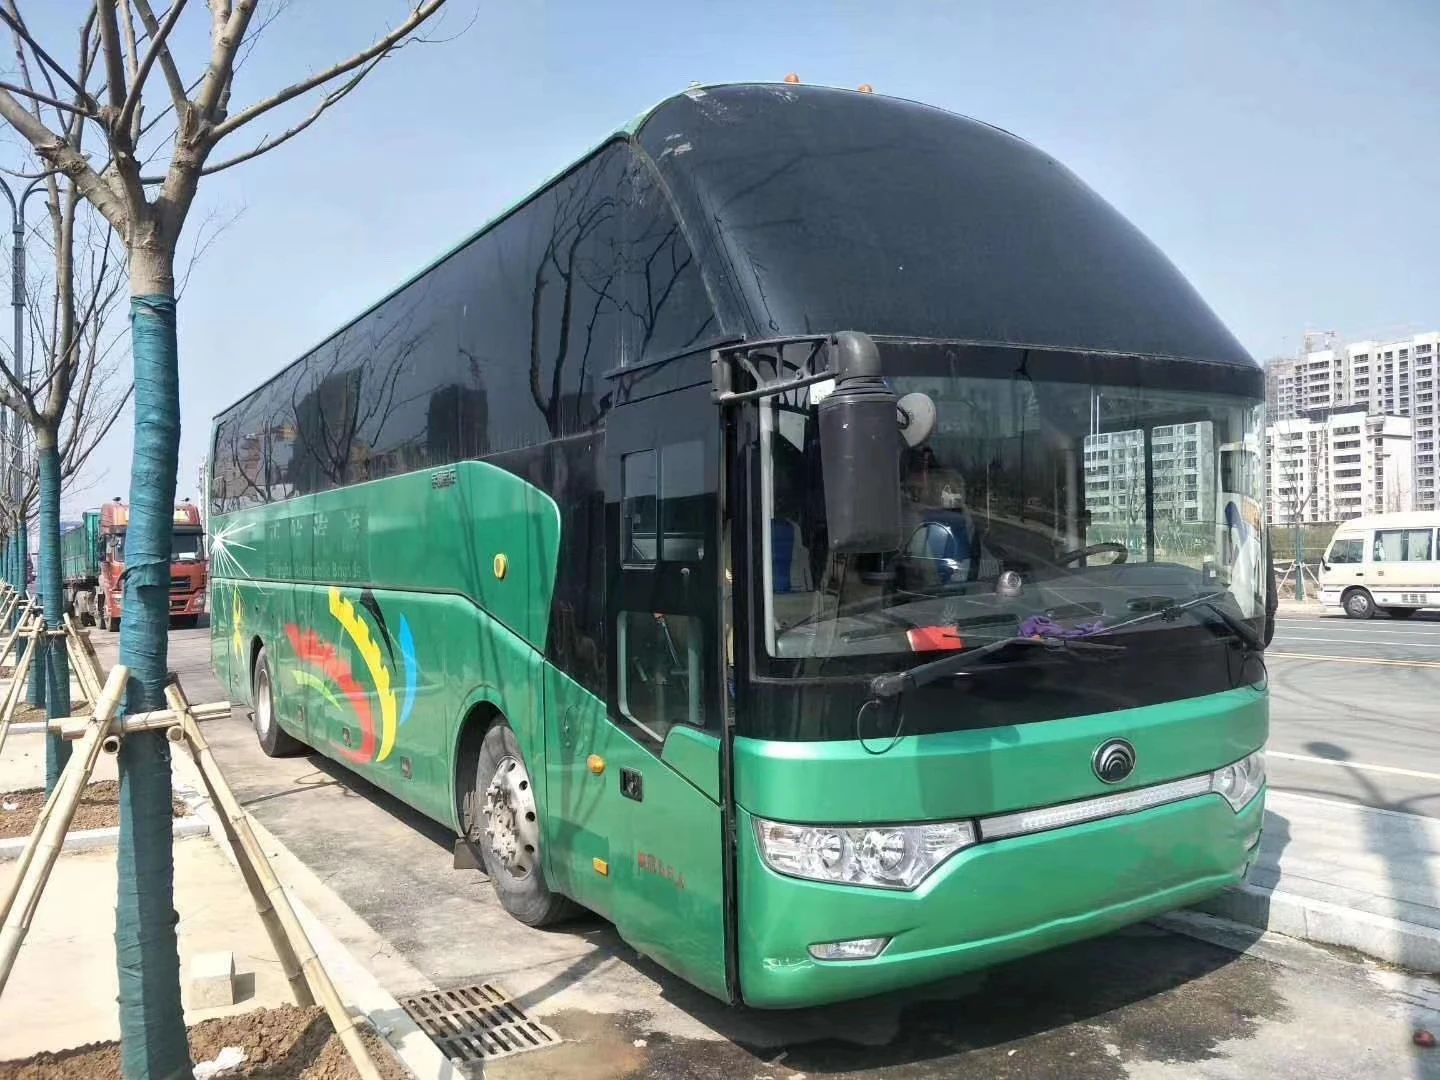 used vehicles yutong 55seats model bus